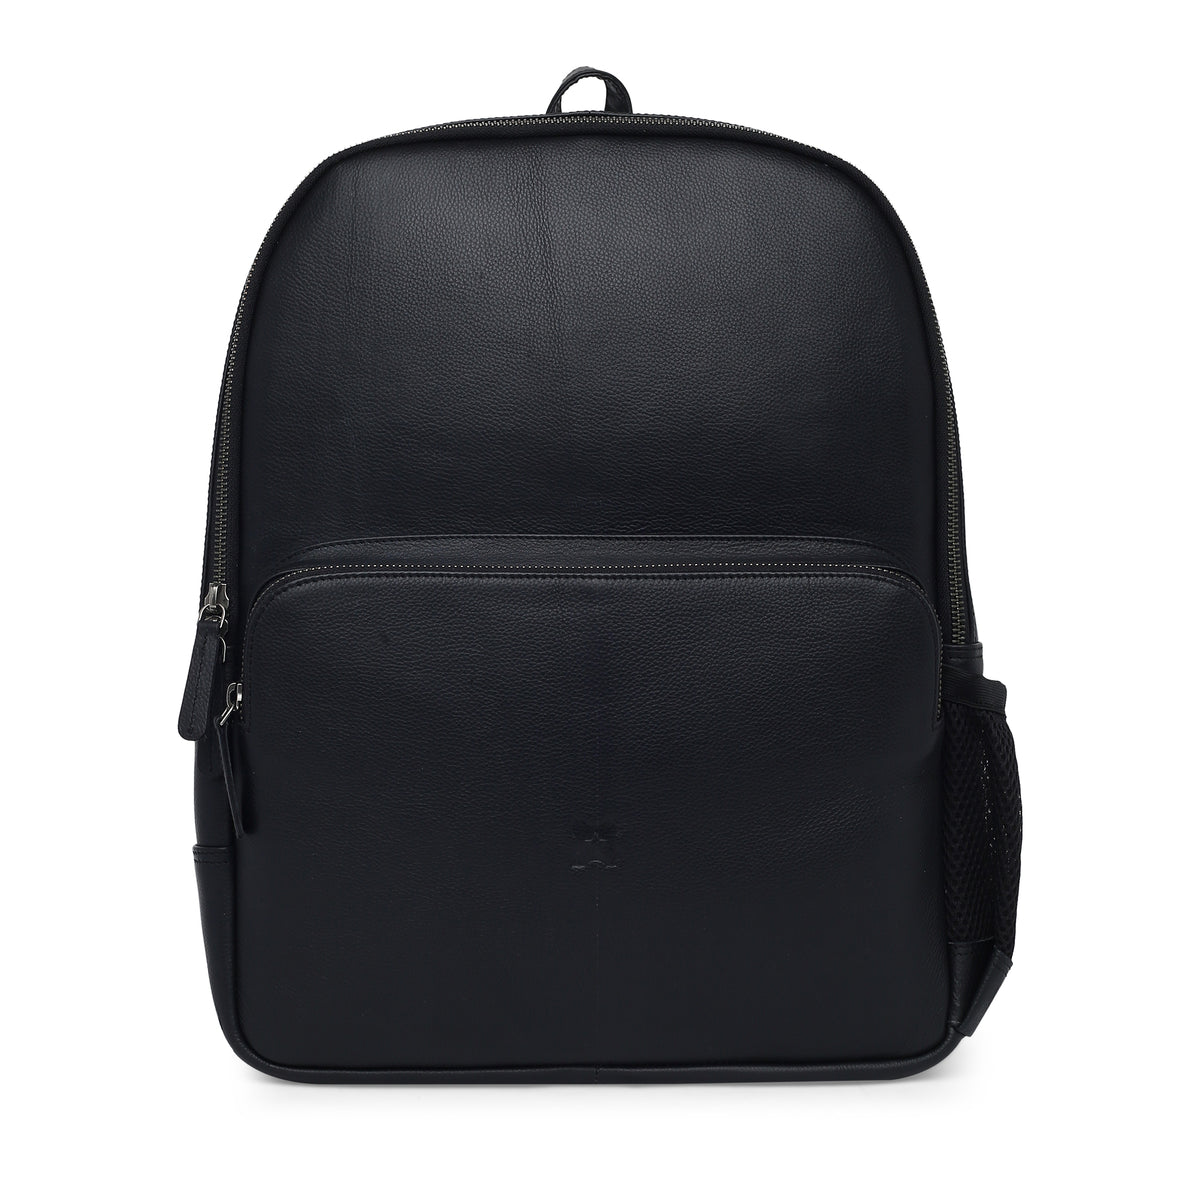 Merecer Melhor's Genuine Leather Laptop Bag- Quondam Dark Brown